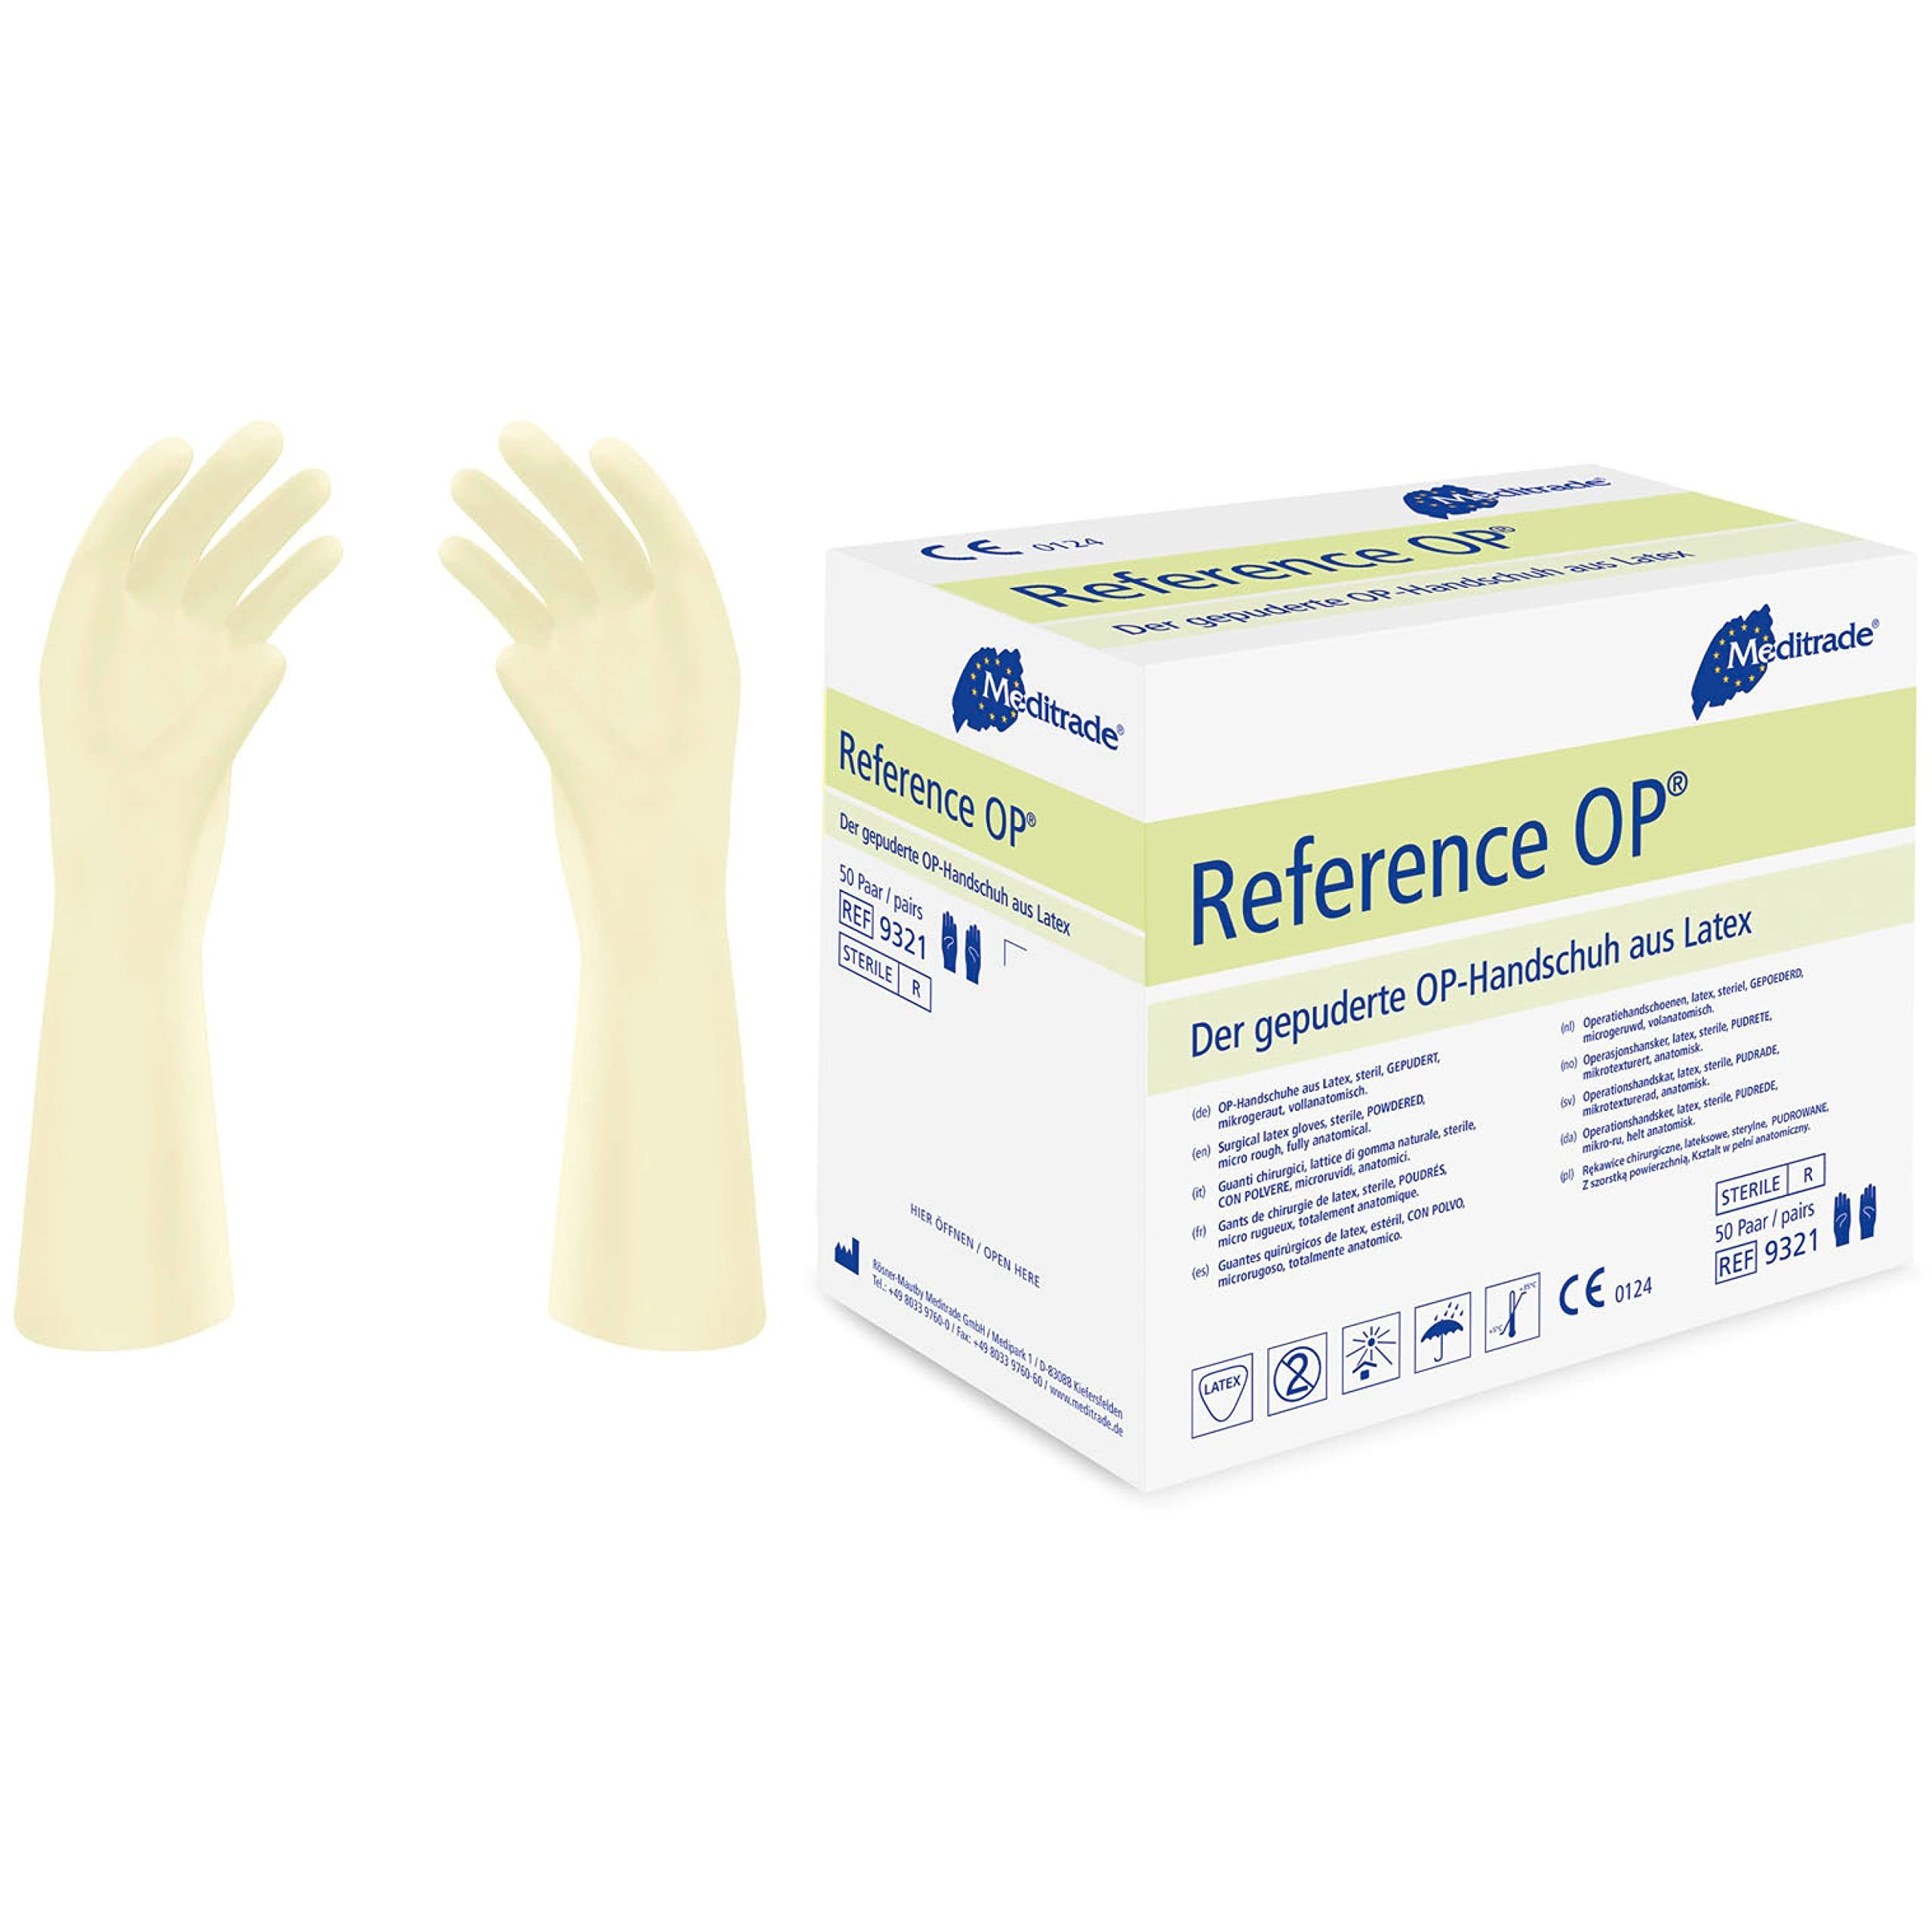 Gr. Latexhandschuhe OPOP-Handschuh gepudert, Latex, aus Reference™ MediTrade 8